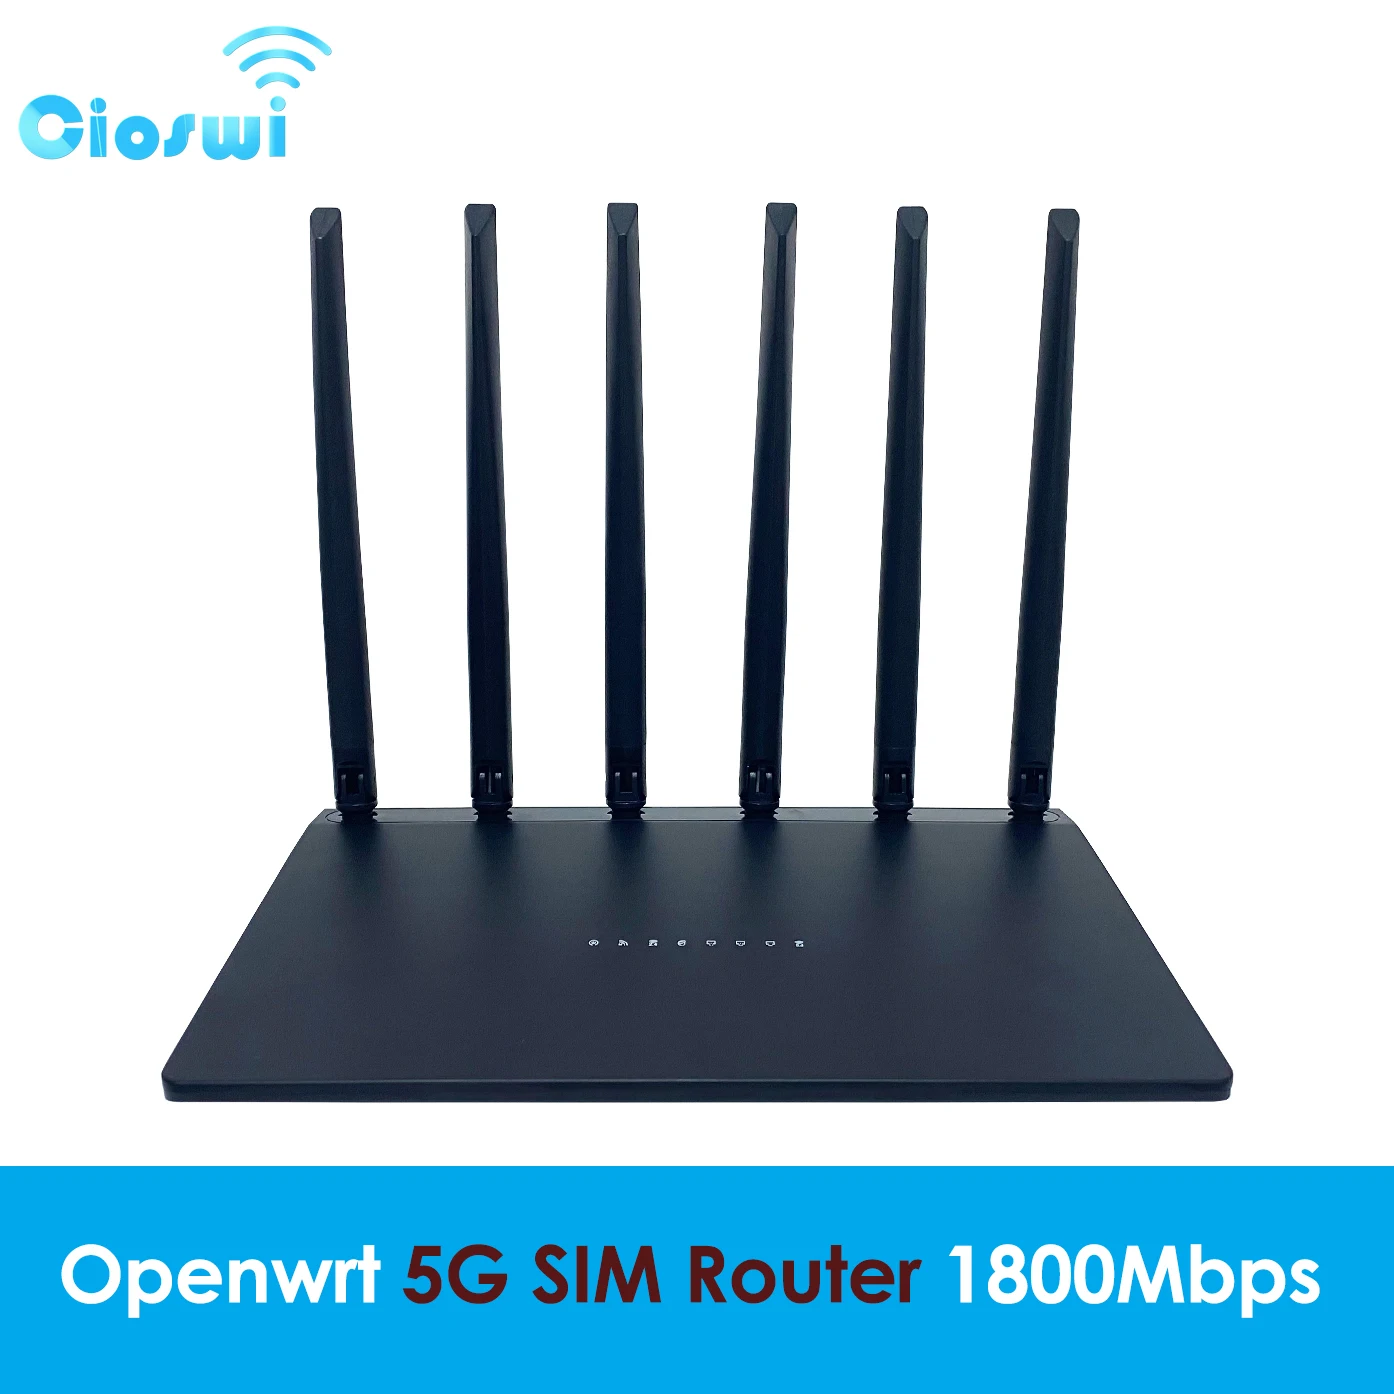 Cioswi Openwrt 5G SIM Router M.2 Modem WiFi6 1800Mbps for 128 Device 128MB Flash 256MB RAM 2.4Ghz 5.8Ghz Wifi MI-MIMO Antenna